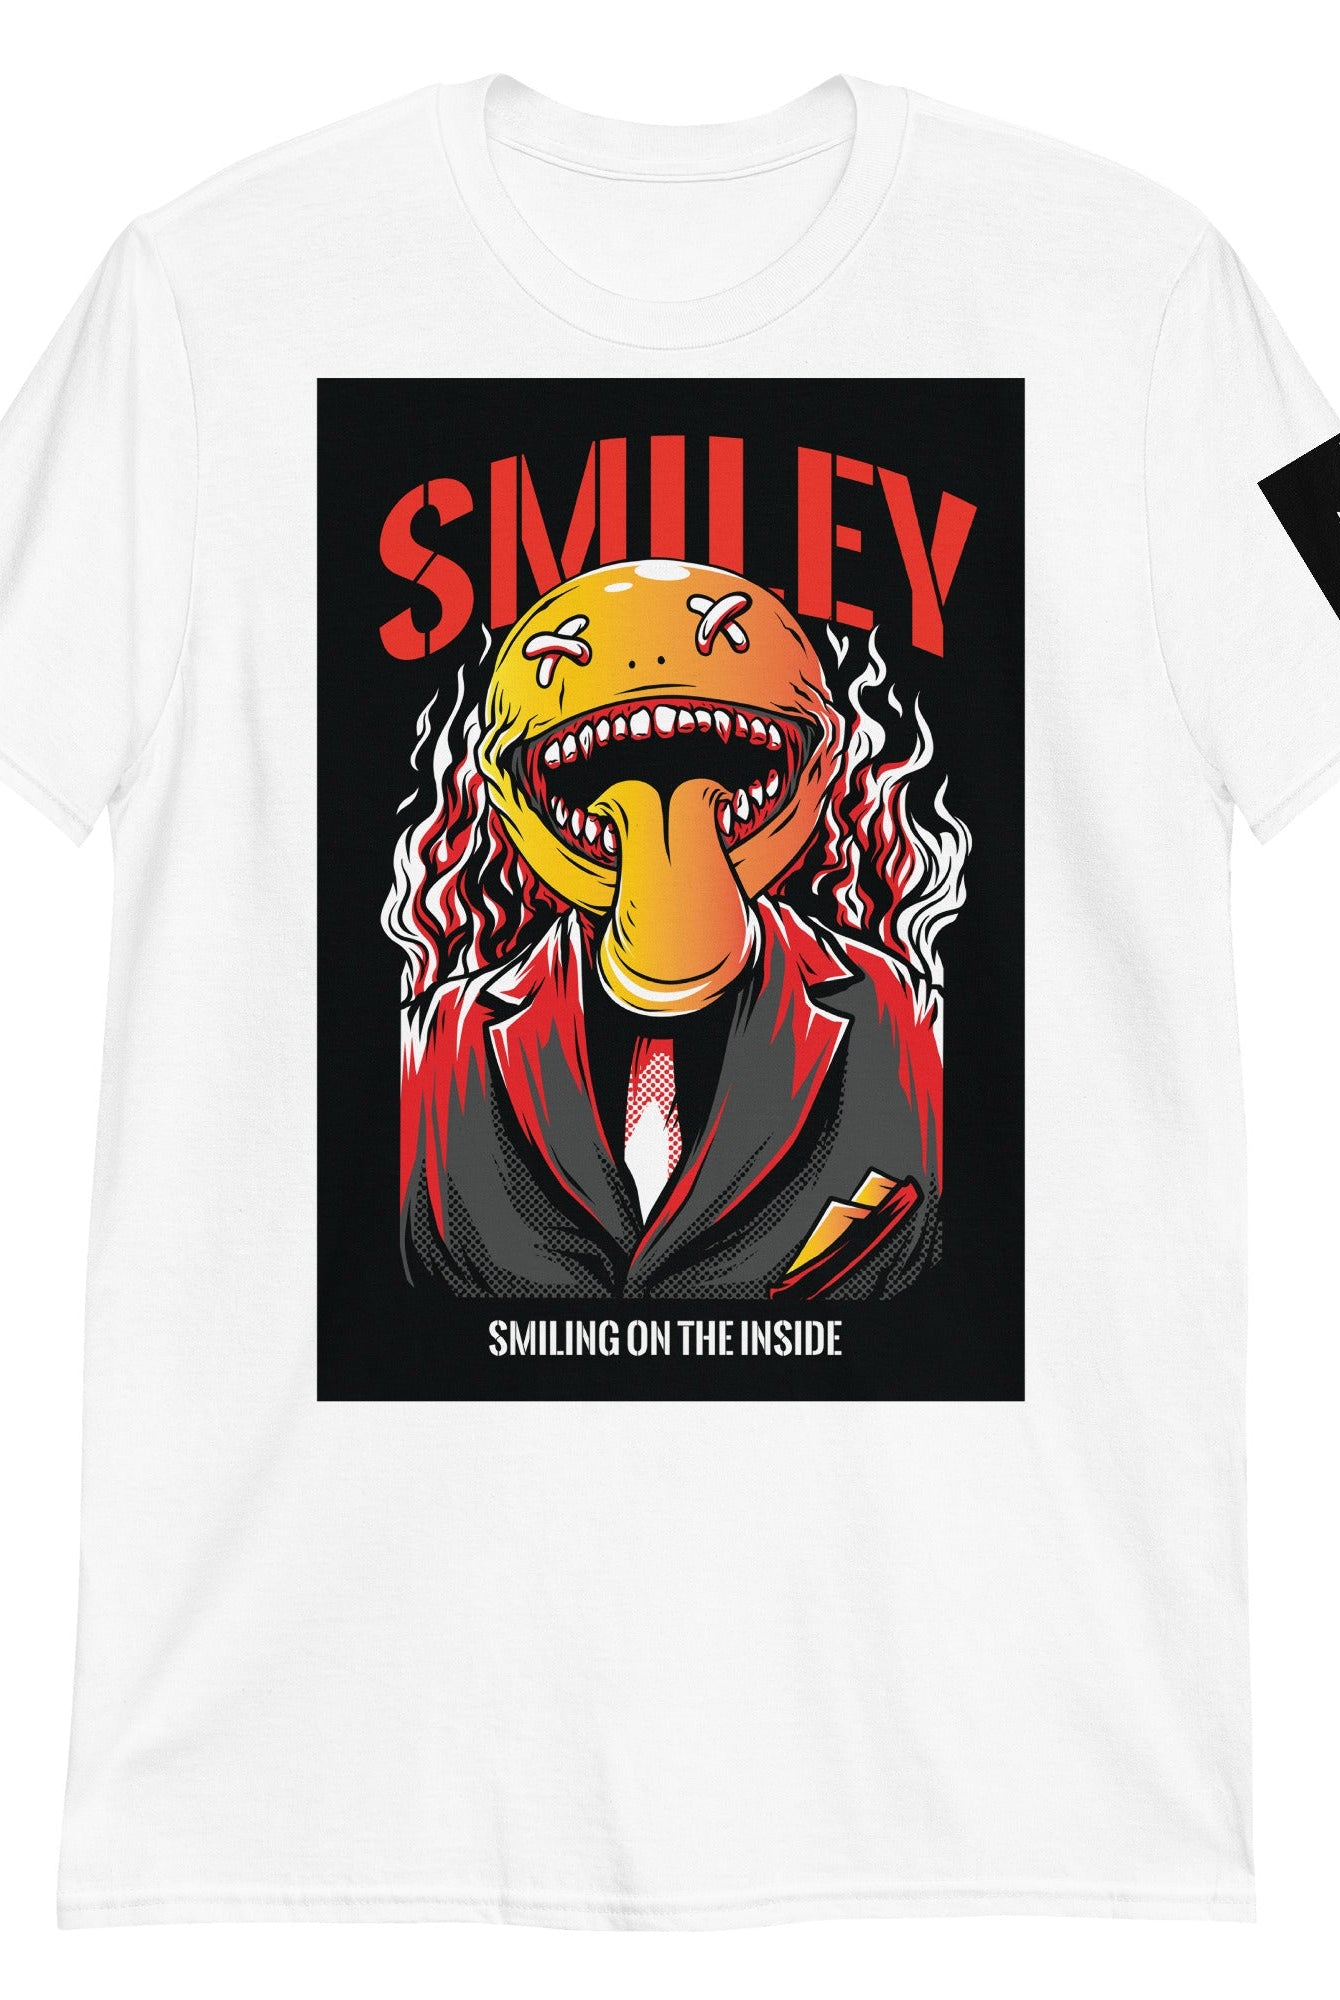 Men's Graphic T-Shirt - SMILEY - Gamer Tee - Men's Graphic T-Shirt - DRAGON FOXX™ - 6382885_473 - White - S - Dragon Foxx™ - Dragon Foxx™ Gamer T-Shirt - Gamer Tee